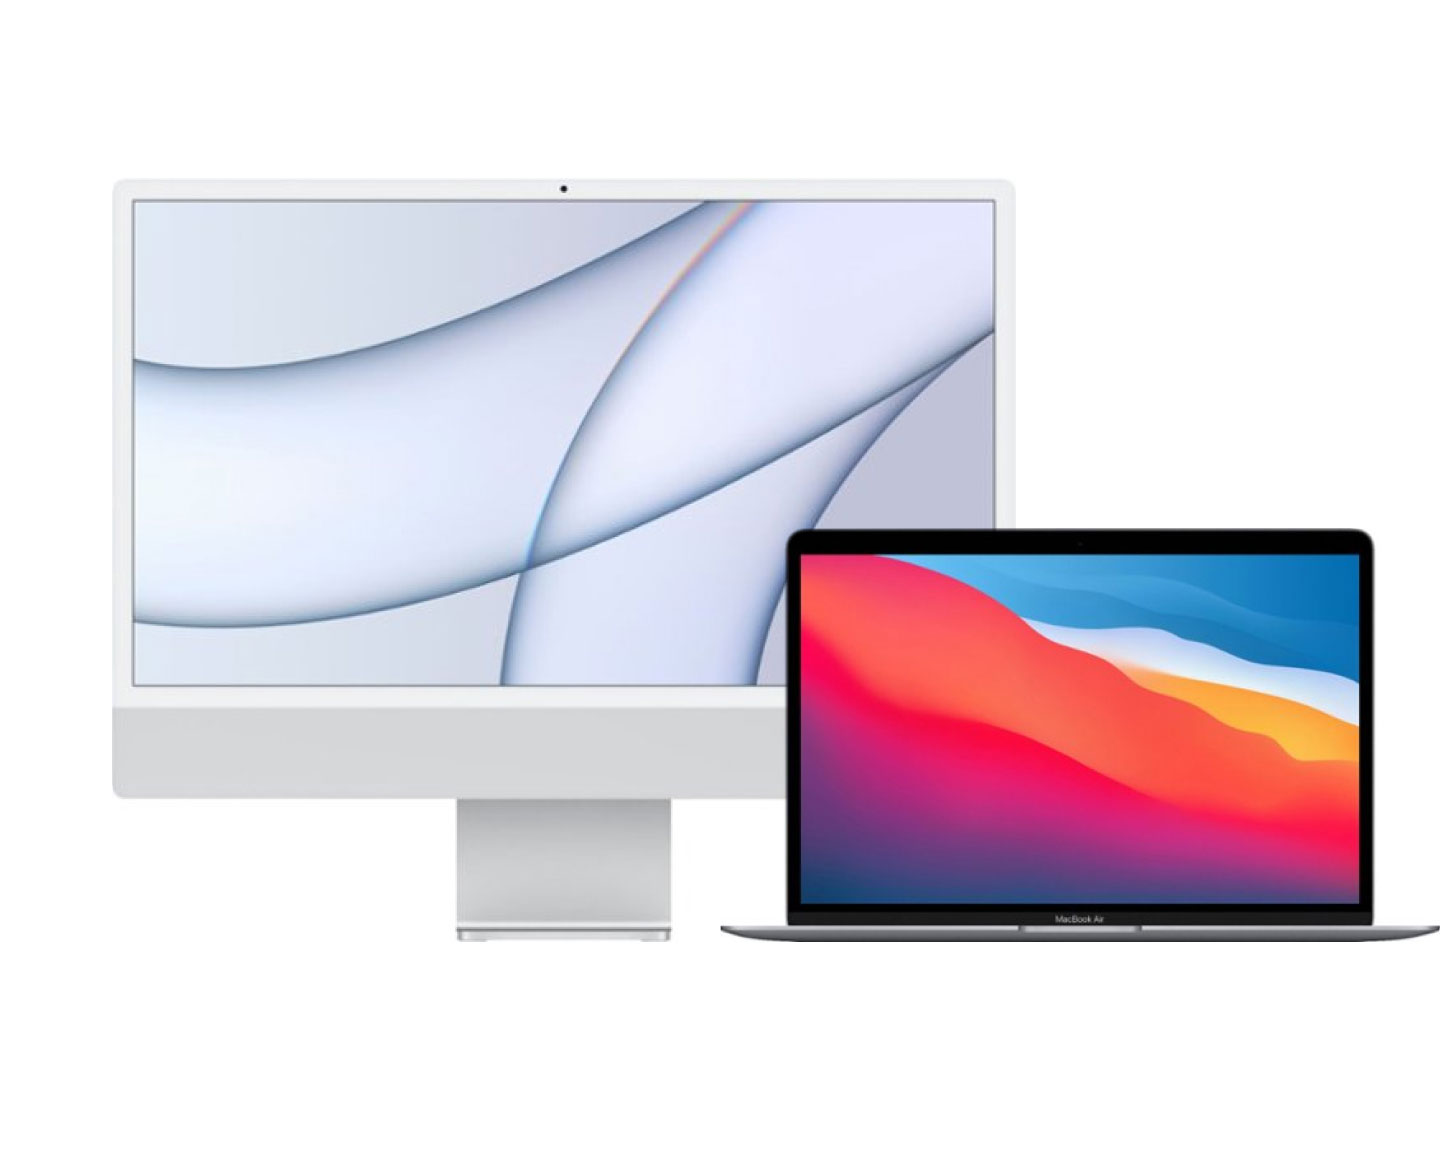 Apple MacBook laptop and iMac